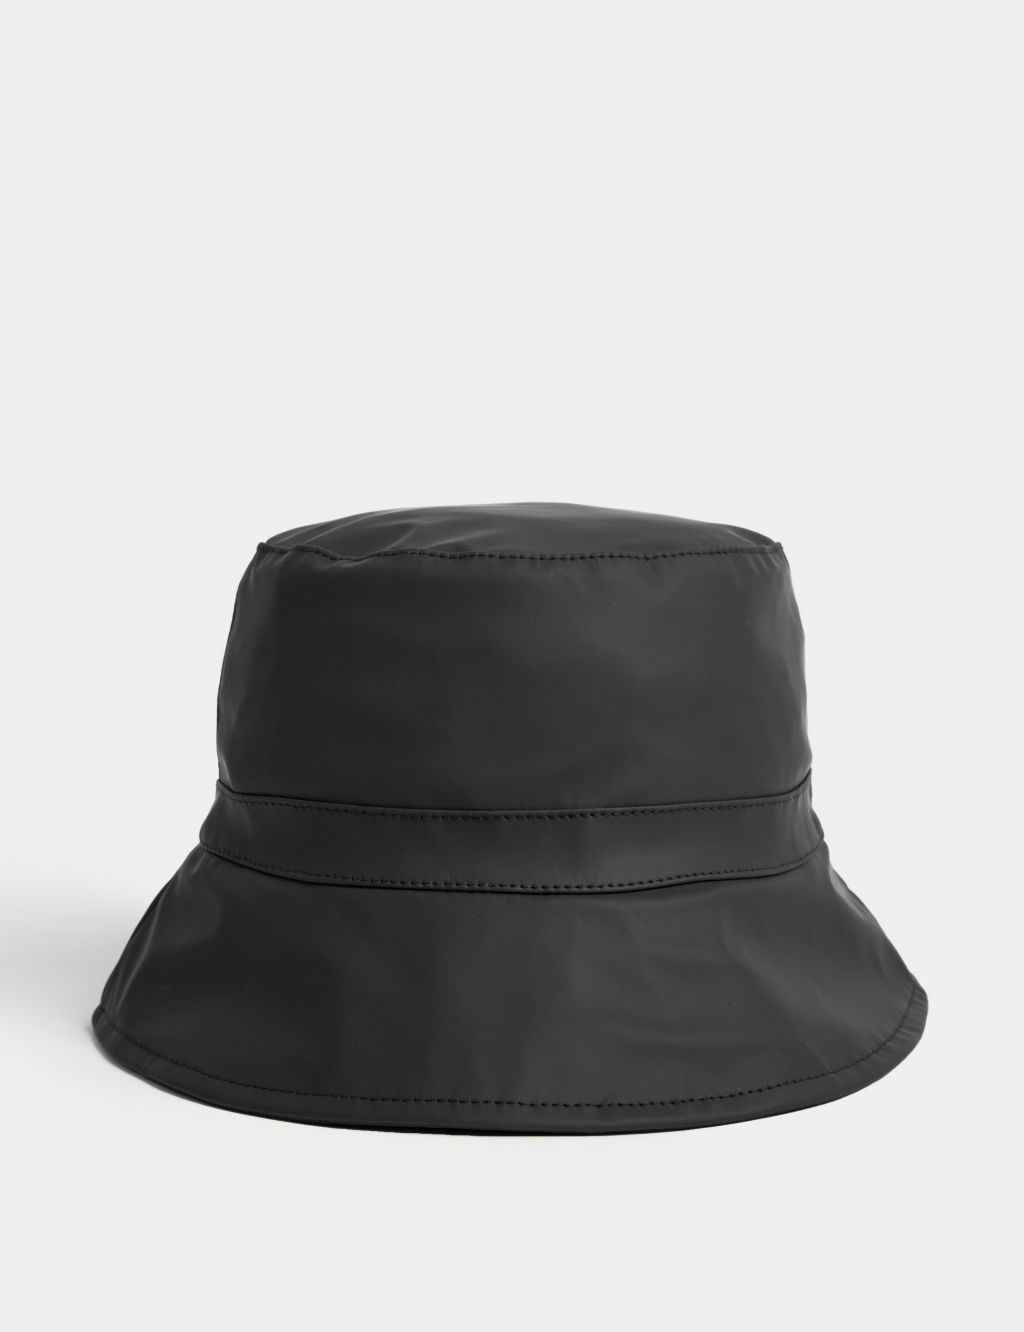 Stormwear™ Bucket Hat image 1